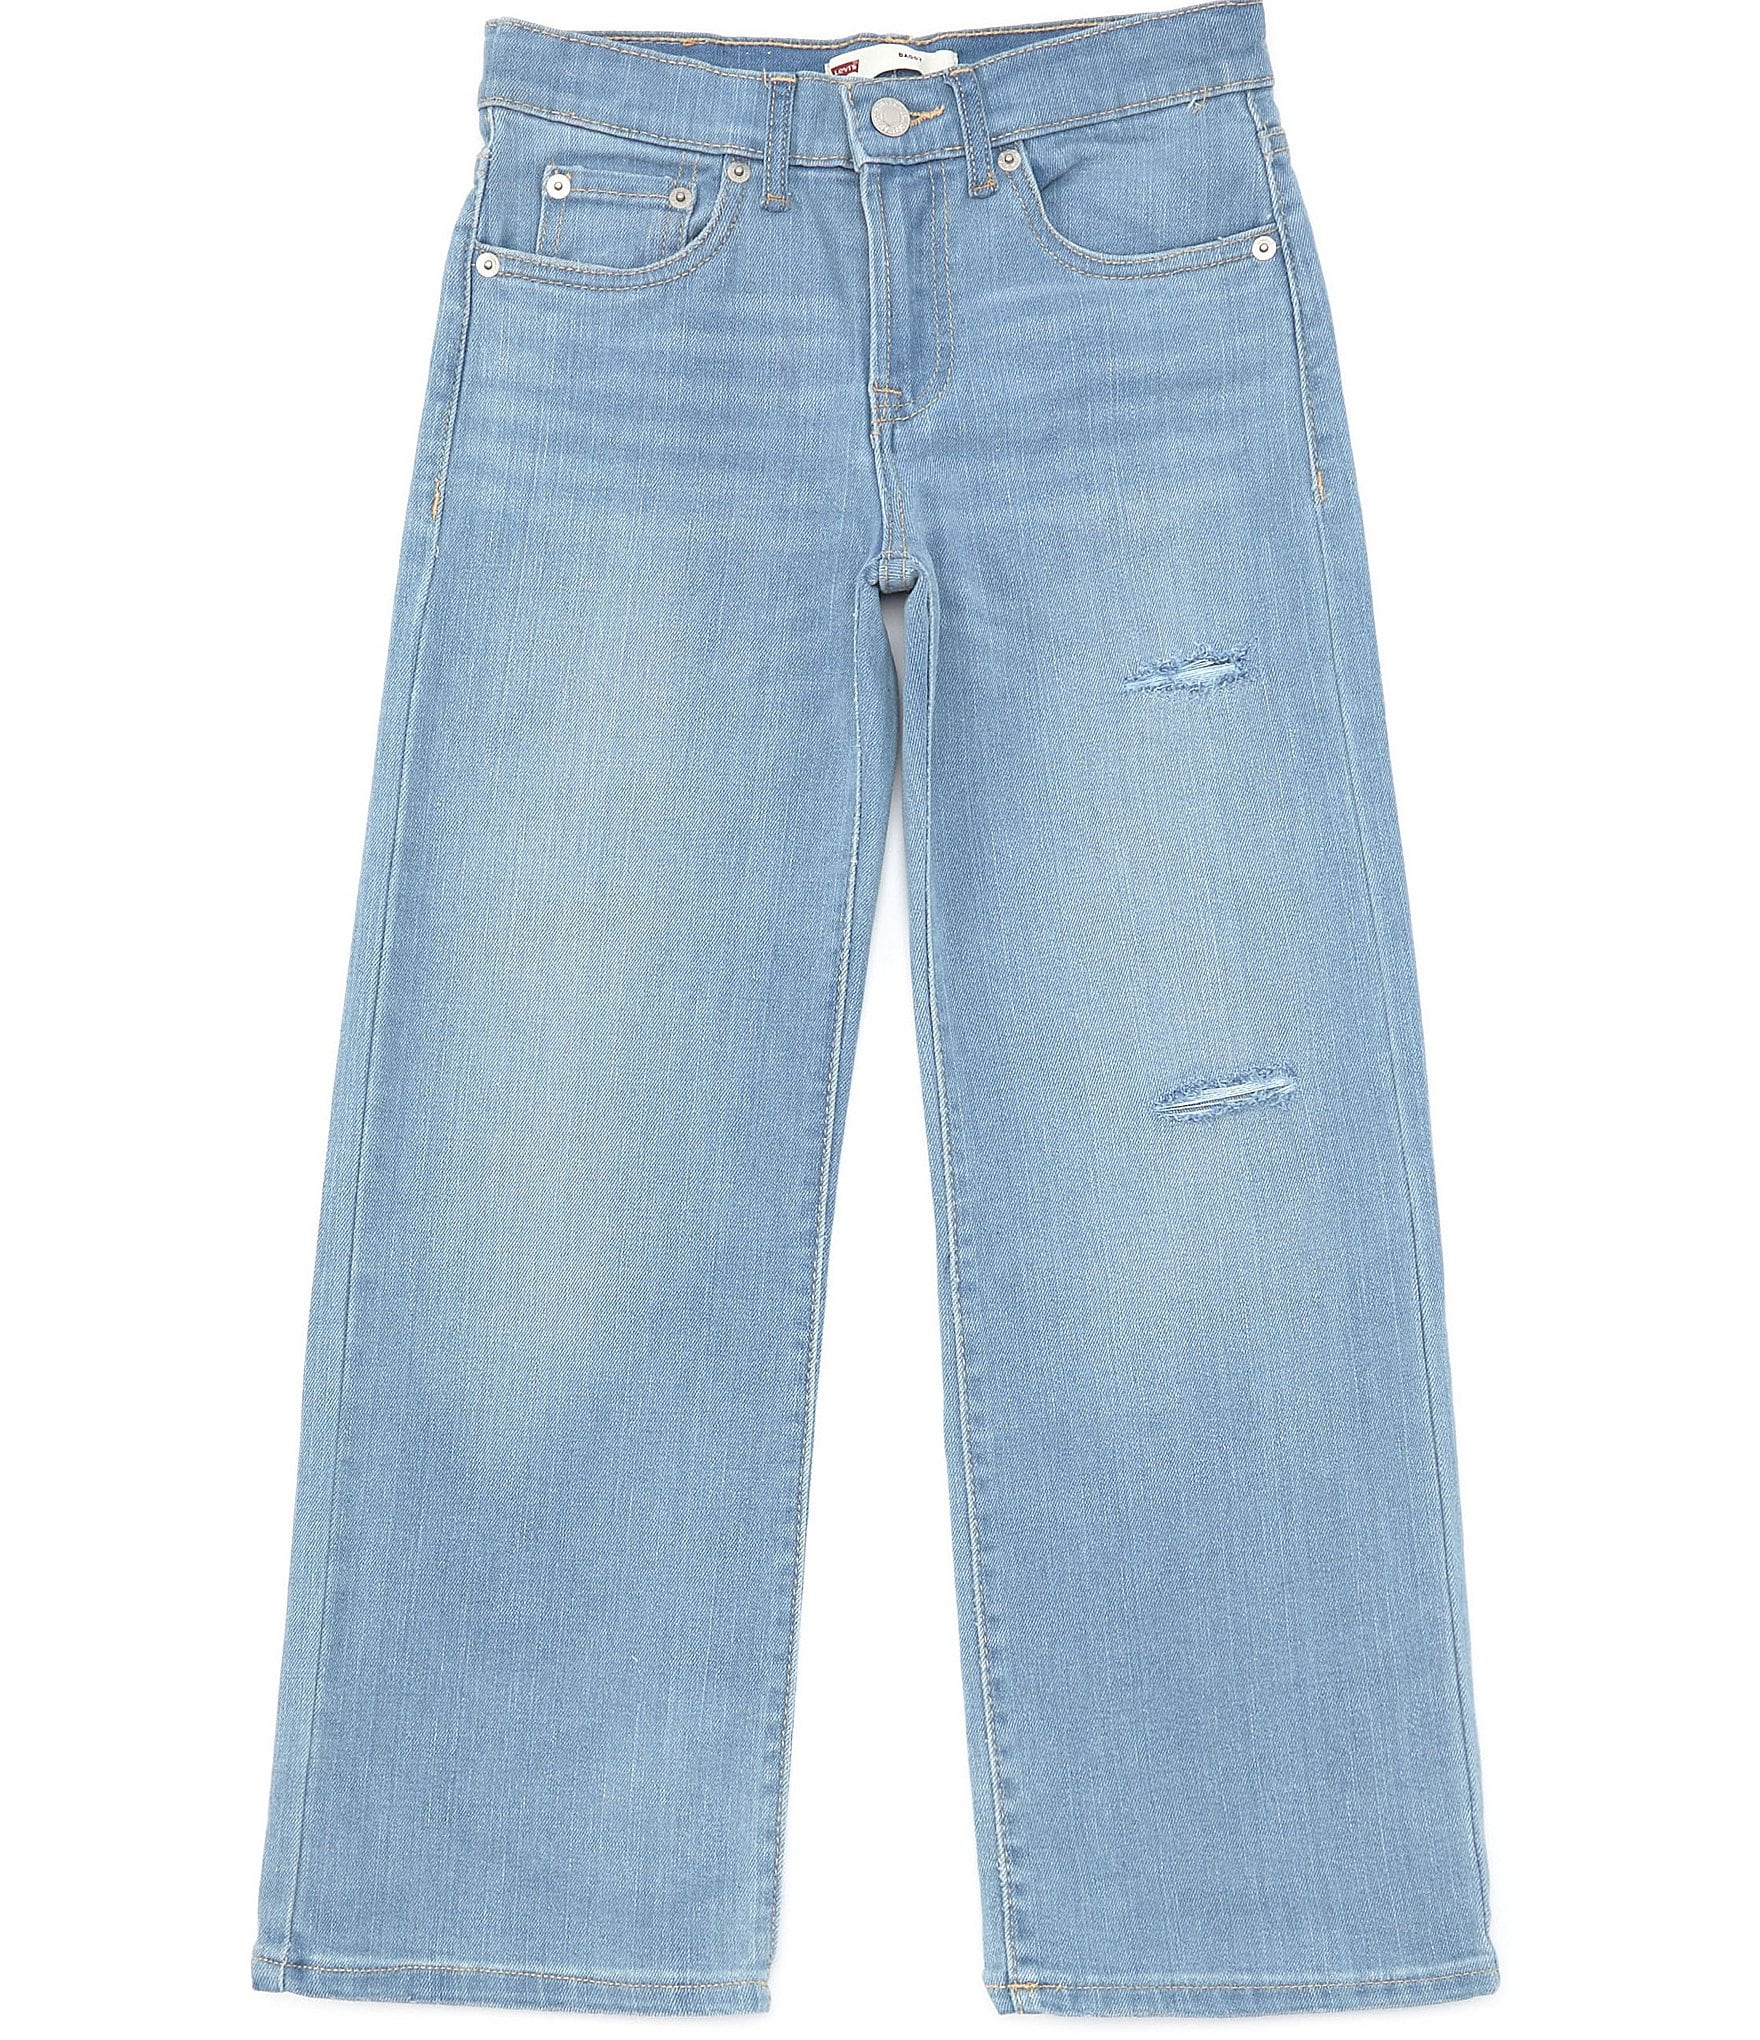 Levi's® Girls' Baggy Jeans - Light Blue 6x : Target